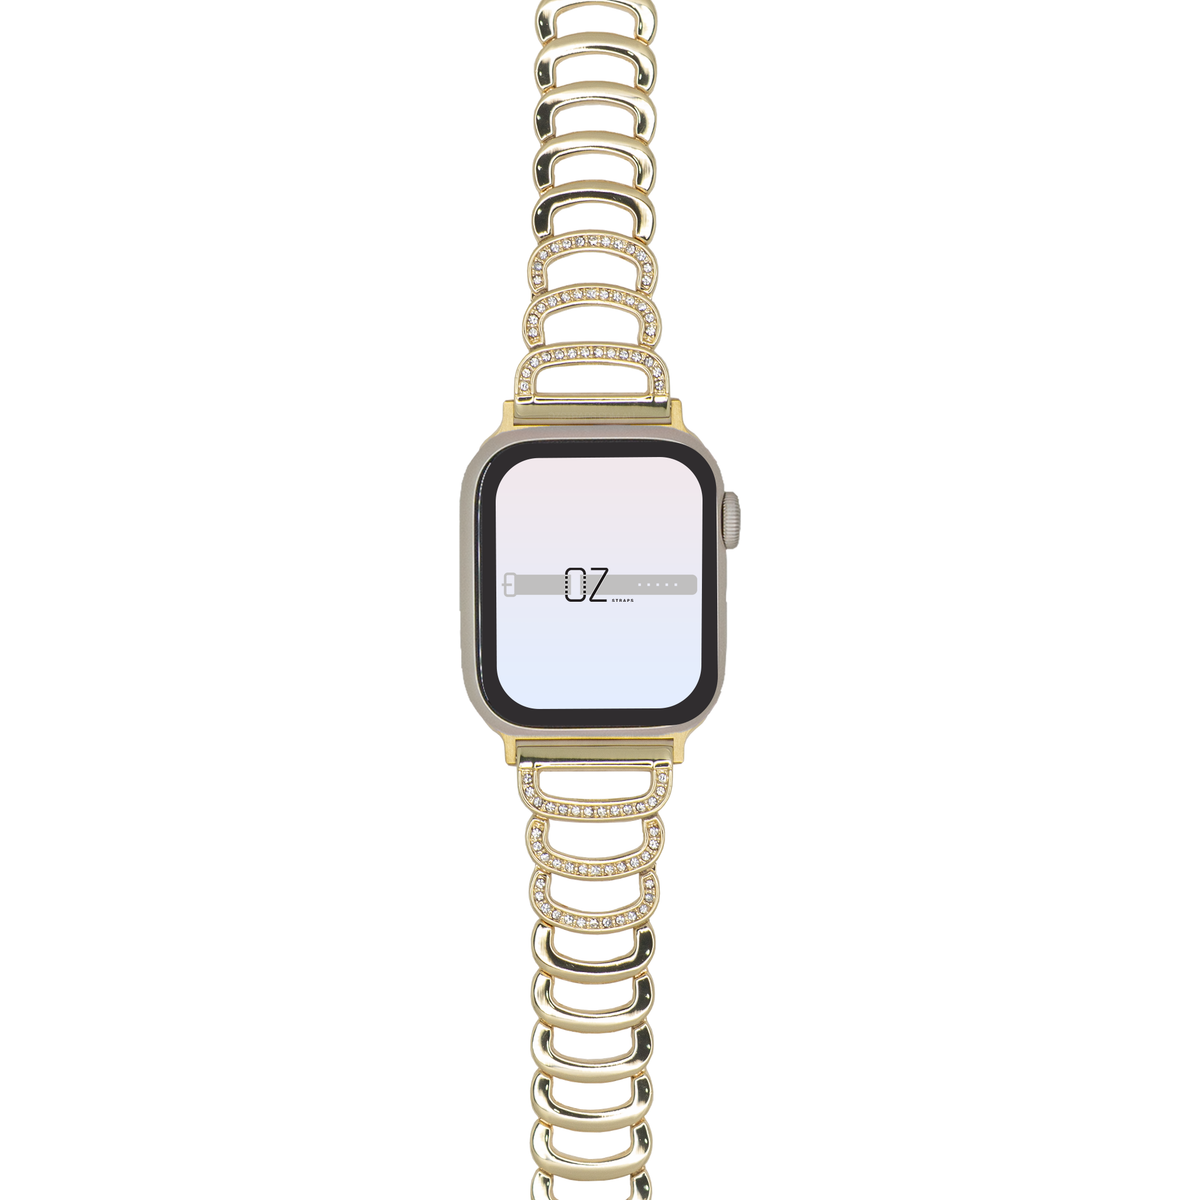 Halo Bracelet Apple Watch Band